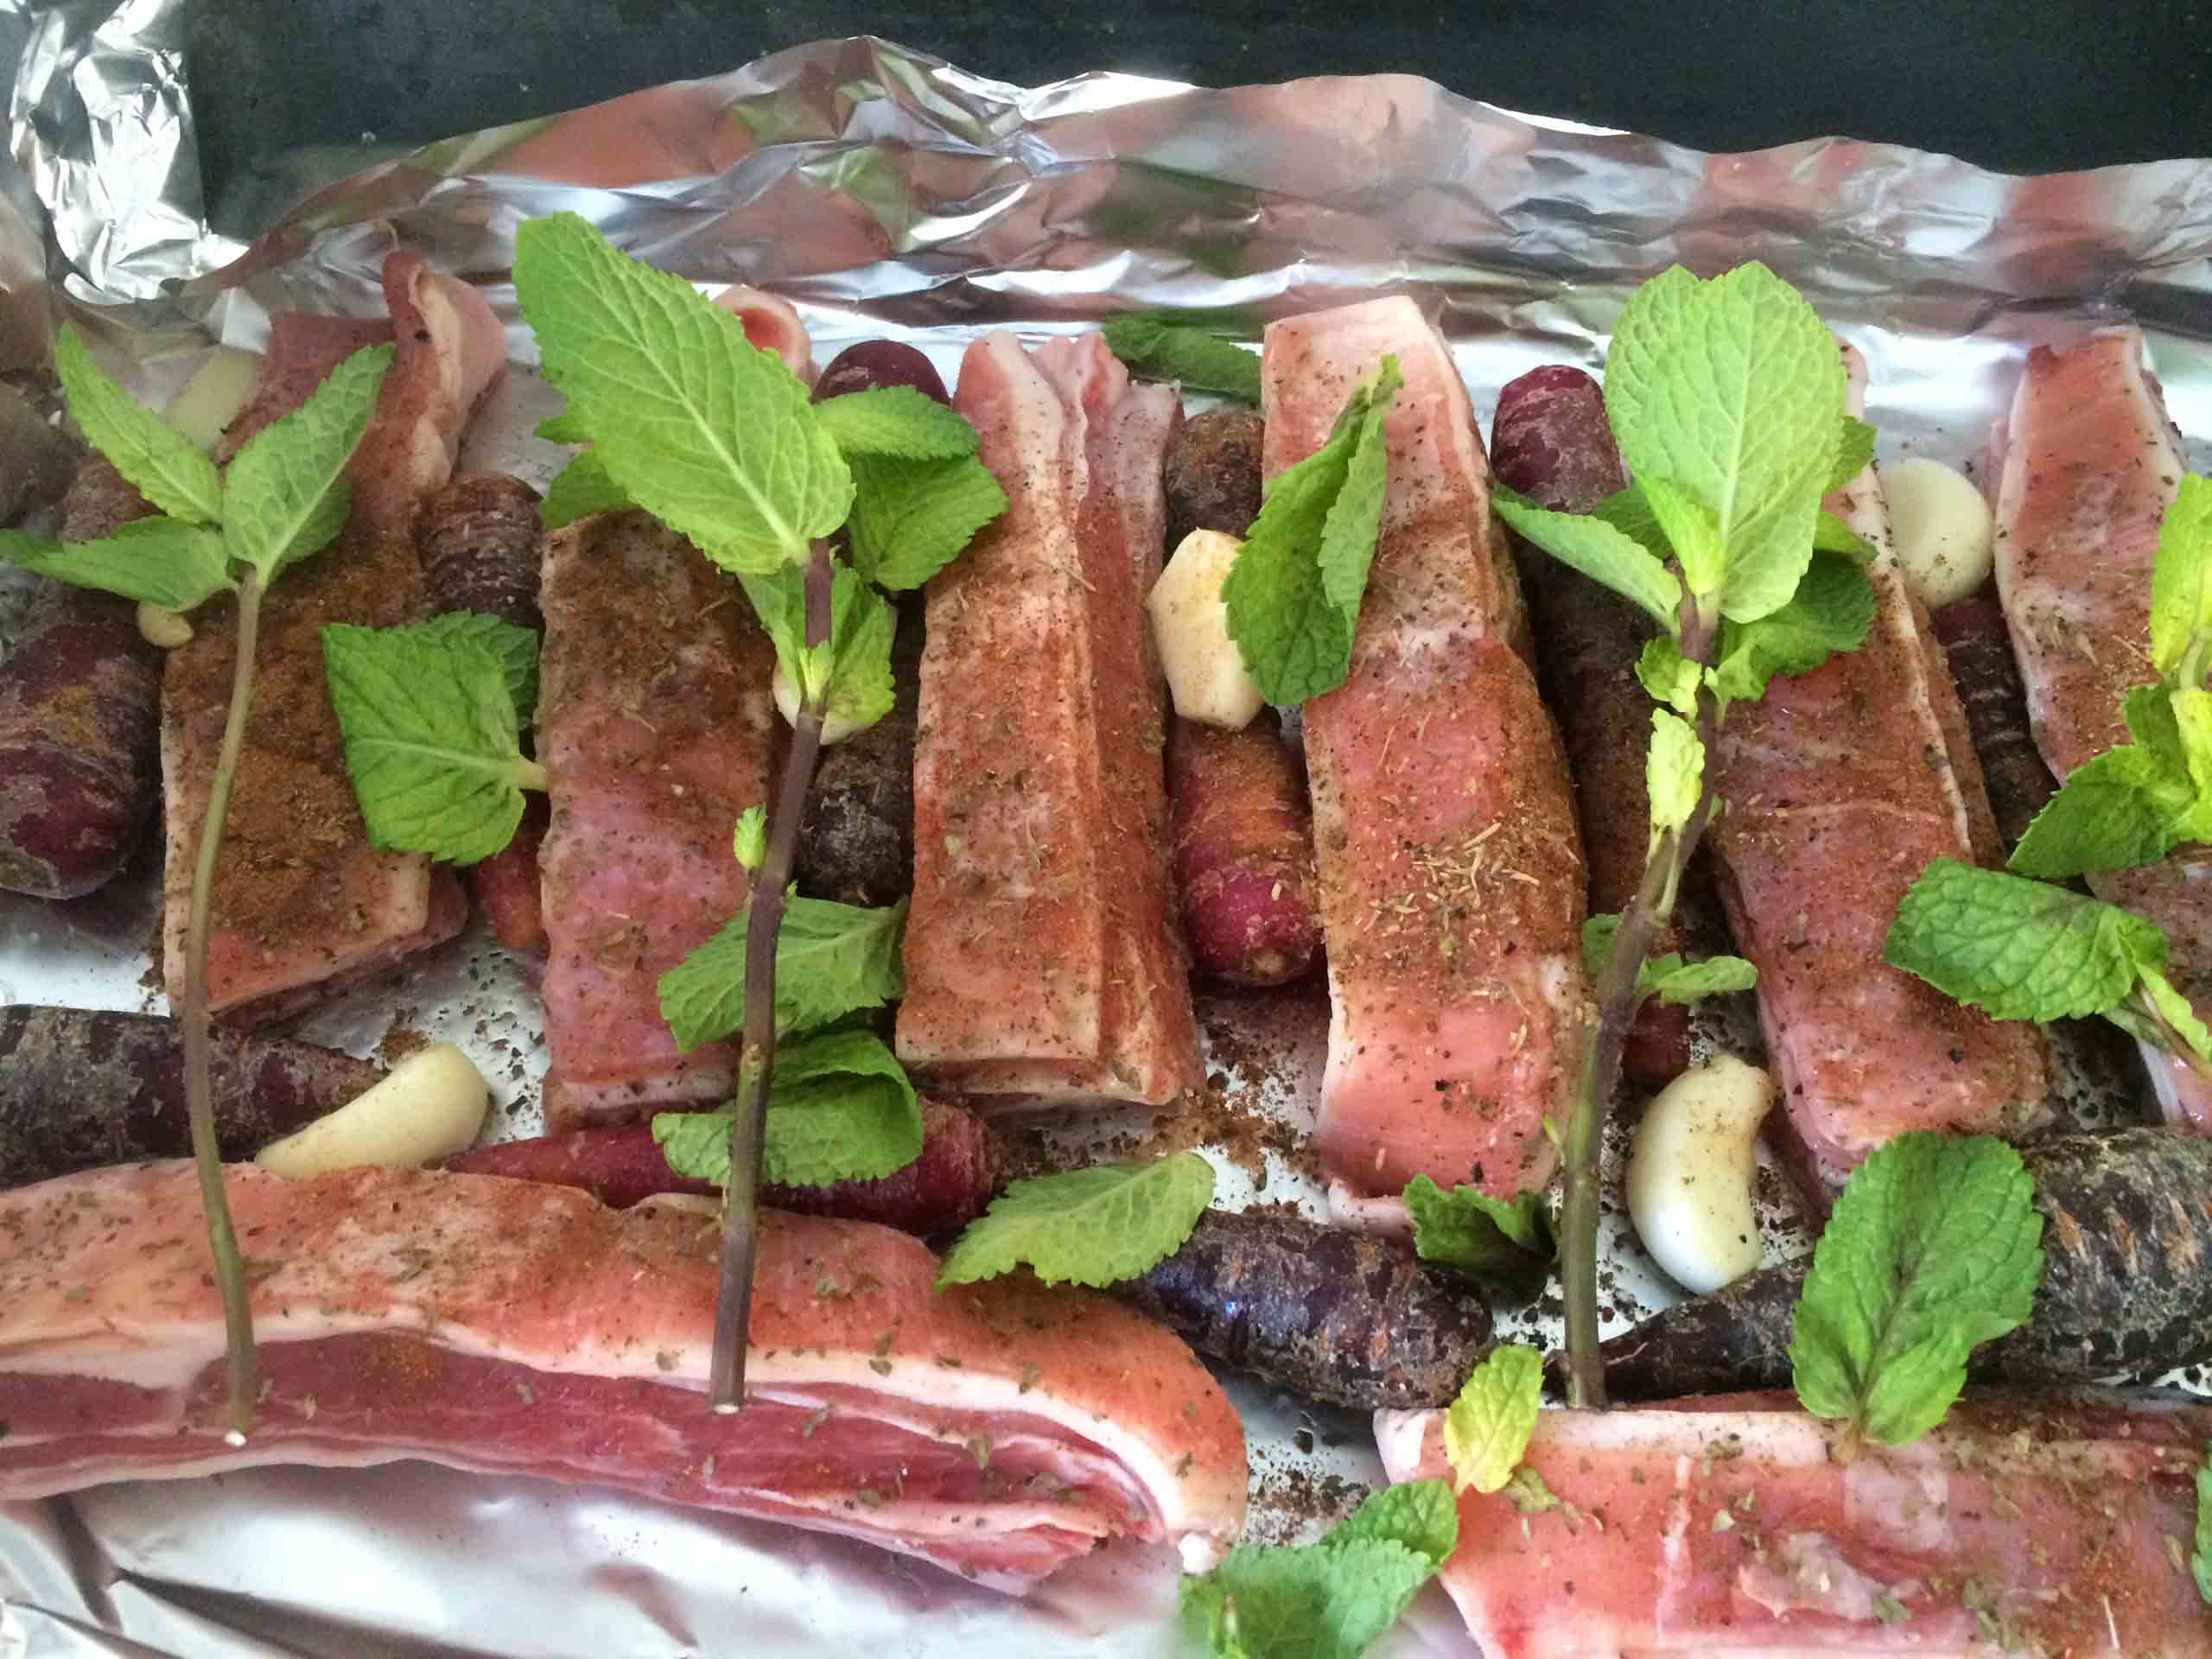 Uncooked lamb ribs with seasoning in aluminium foil.